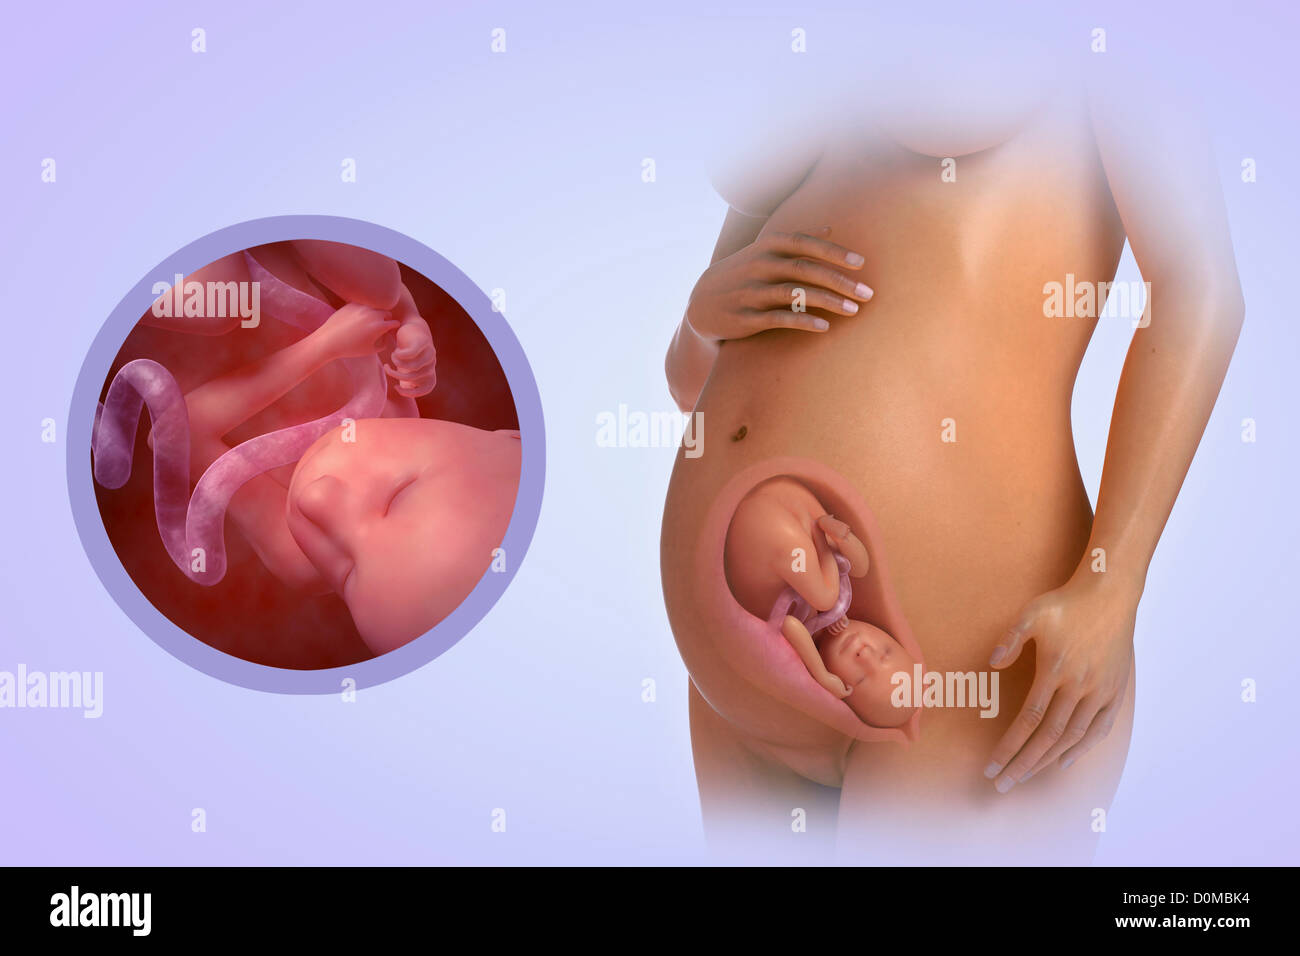 28 week fetus immagini e fotografie stock ad alta risoluzione - Alamy